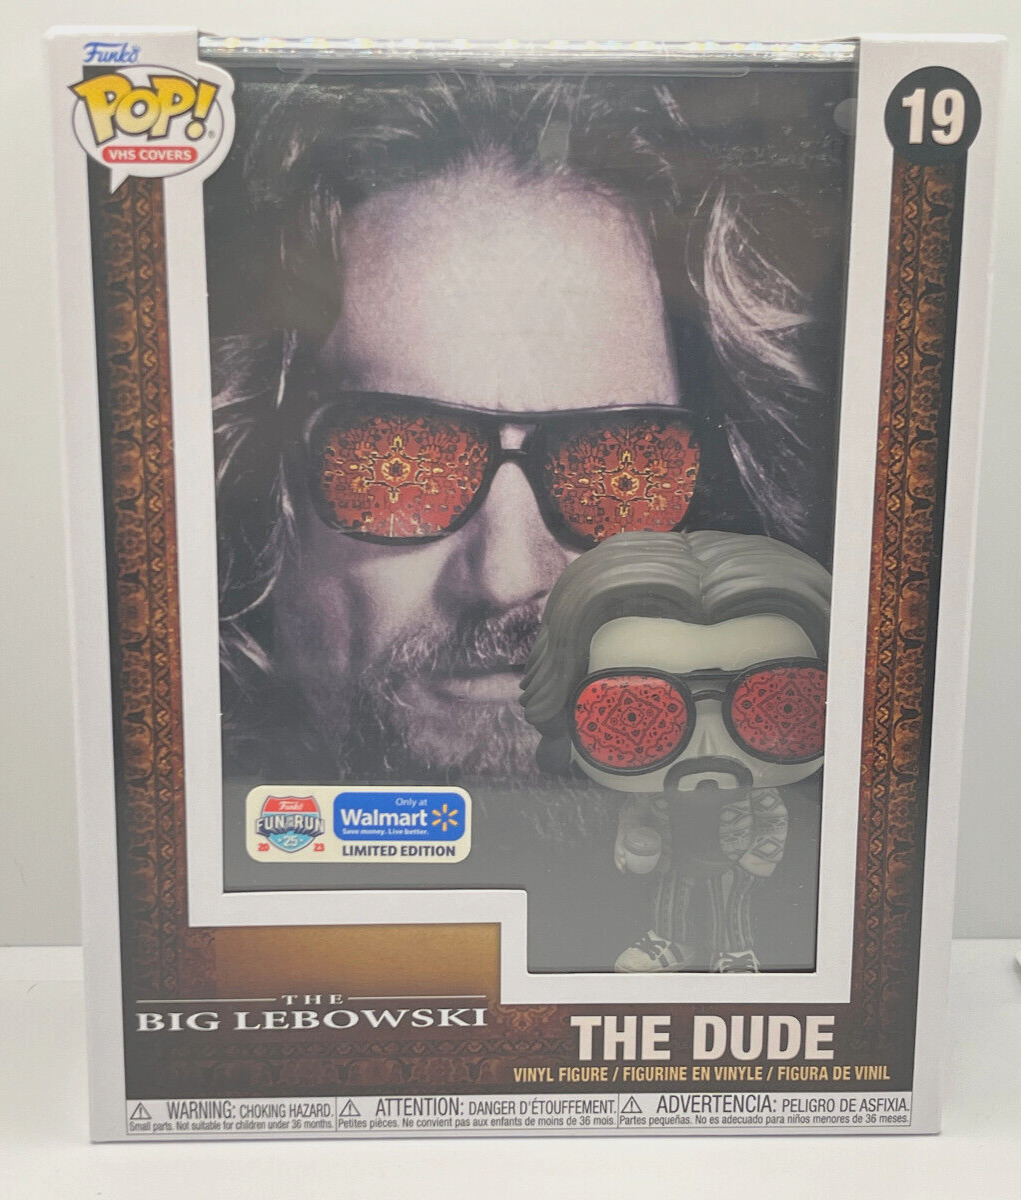 Funko Pop The Big Lebowski VHS Covers The Dude Walmart Exclusive Fun Run LE #19